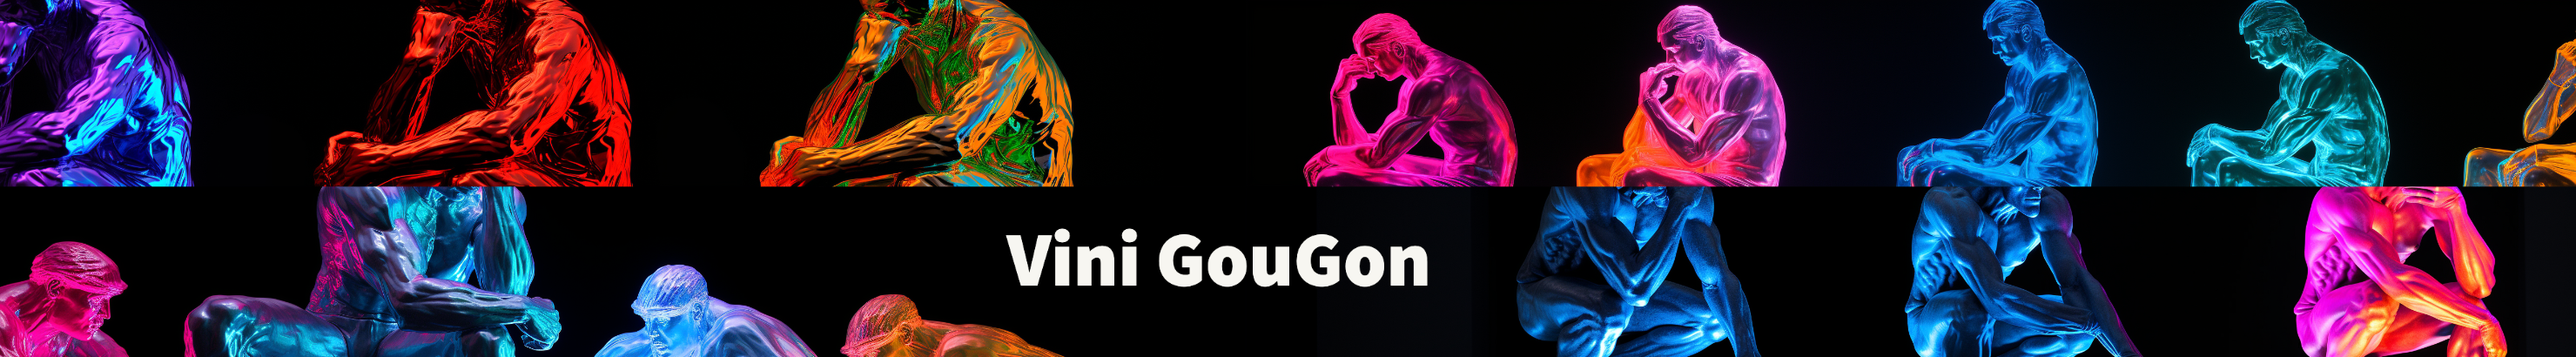 Vini GouGon's profile banner